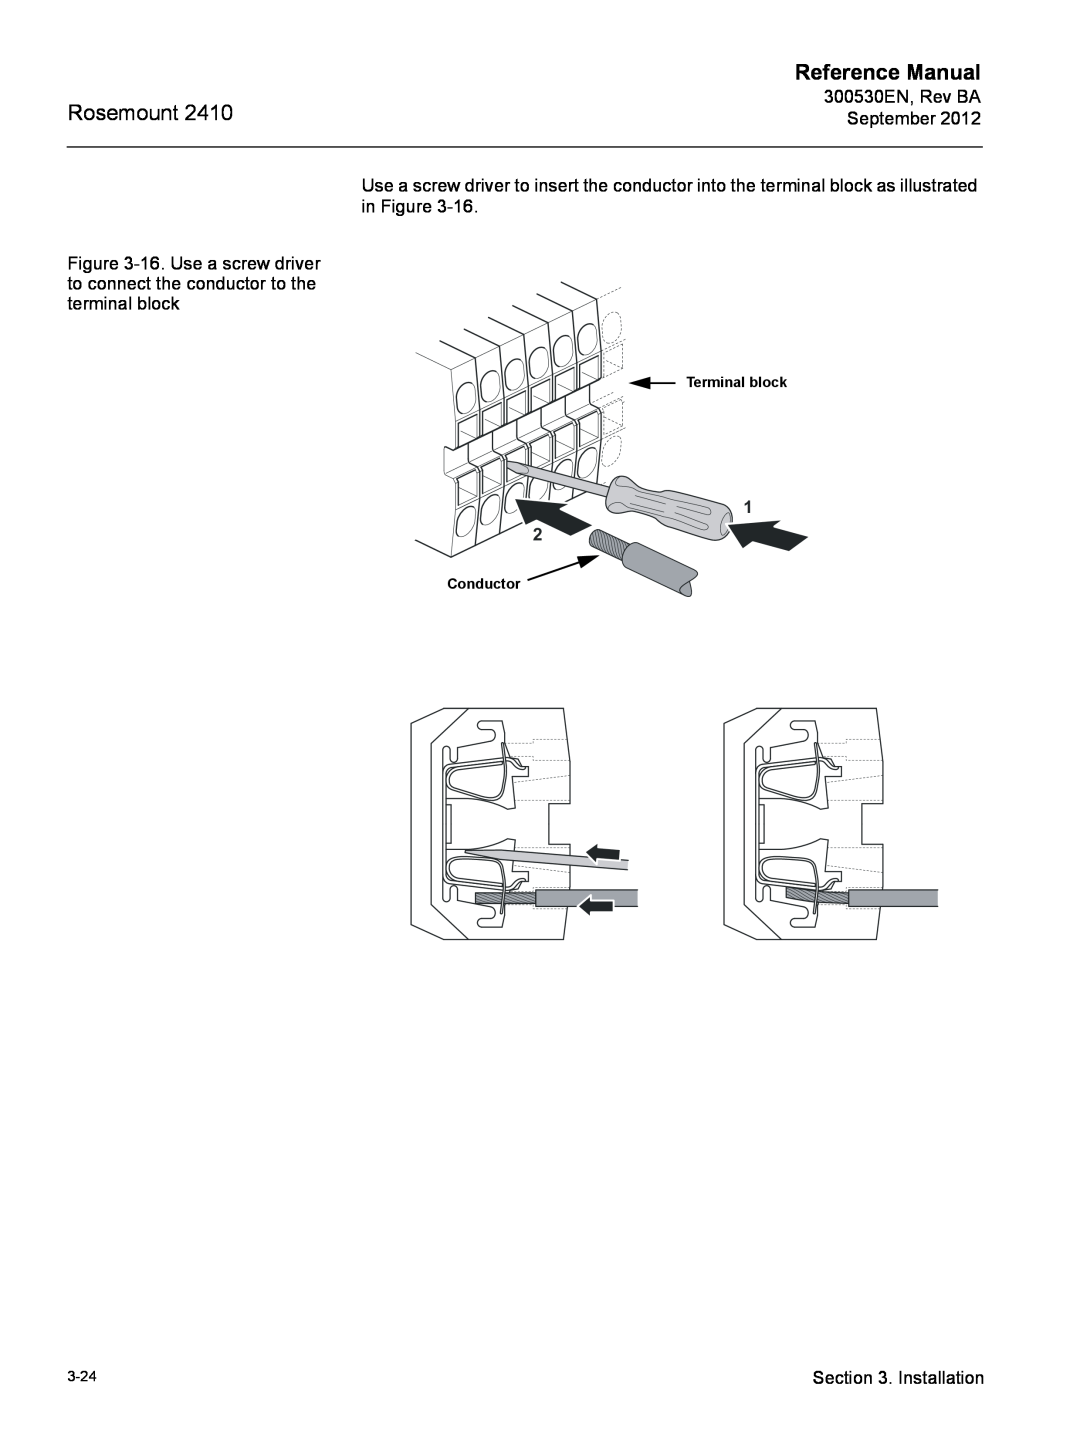 Emerson Process Management Rosemount 2410 manual Reference Manual, Terminal block, Conductor, 3-24 